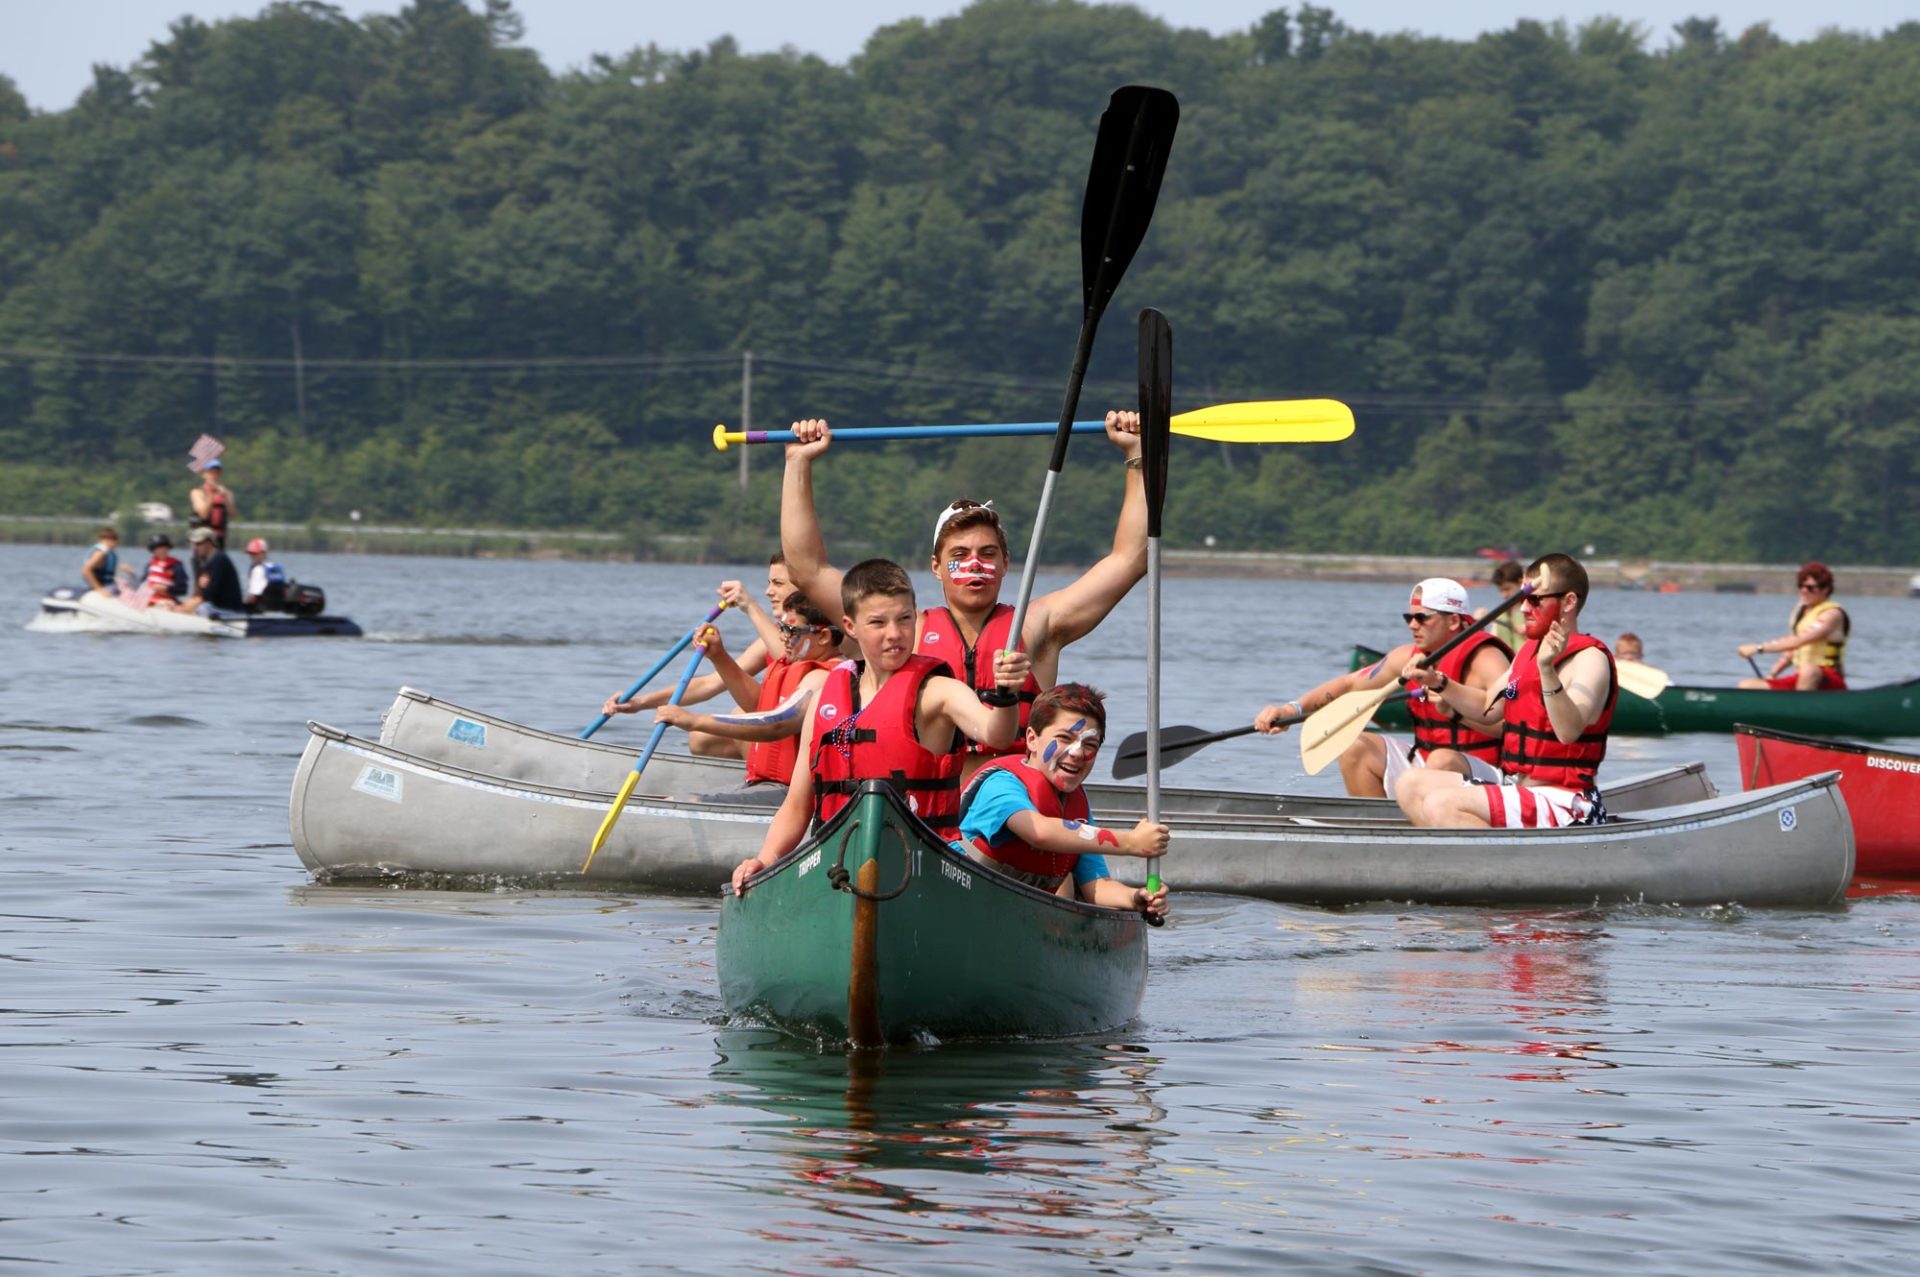 Camp Miniwanca Trailblazers in canoe wave paddles in celebration